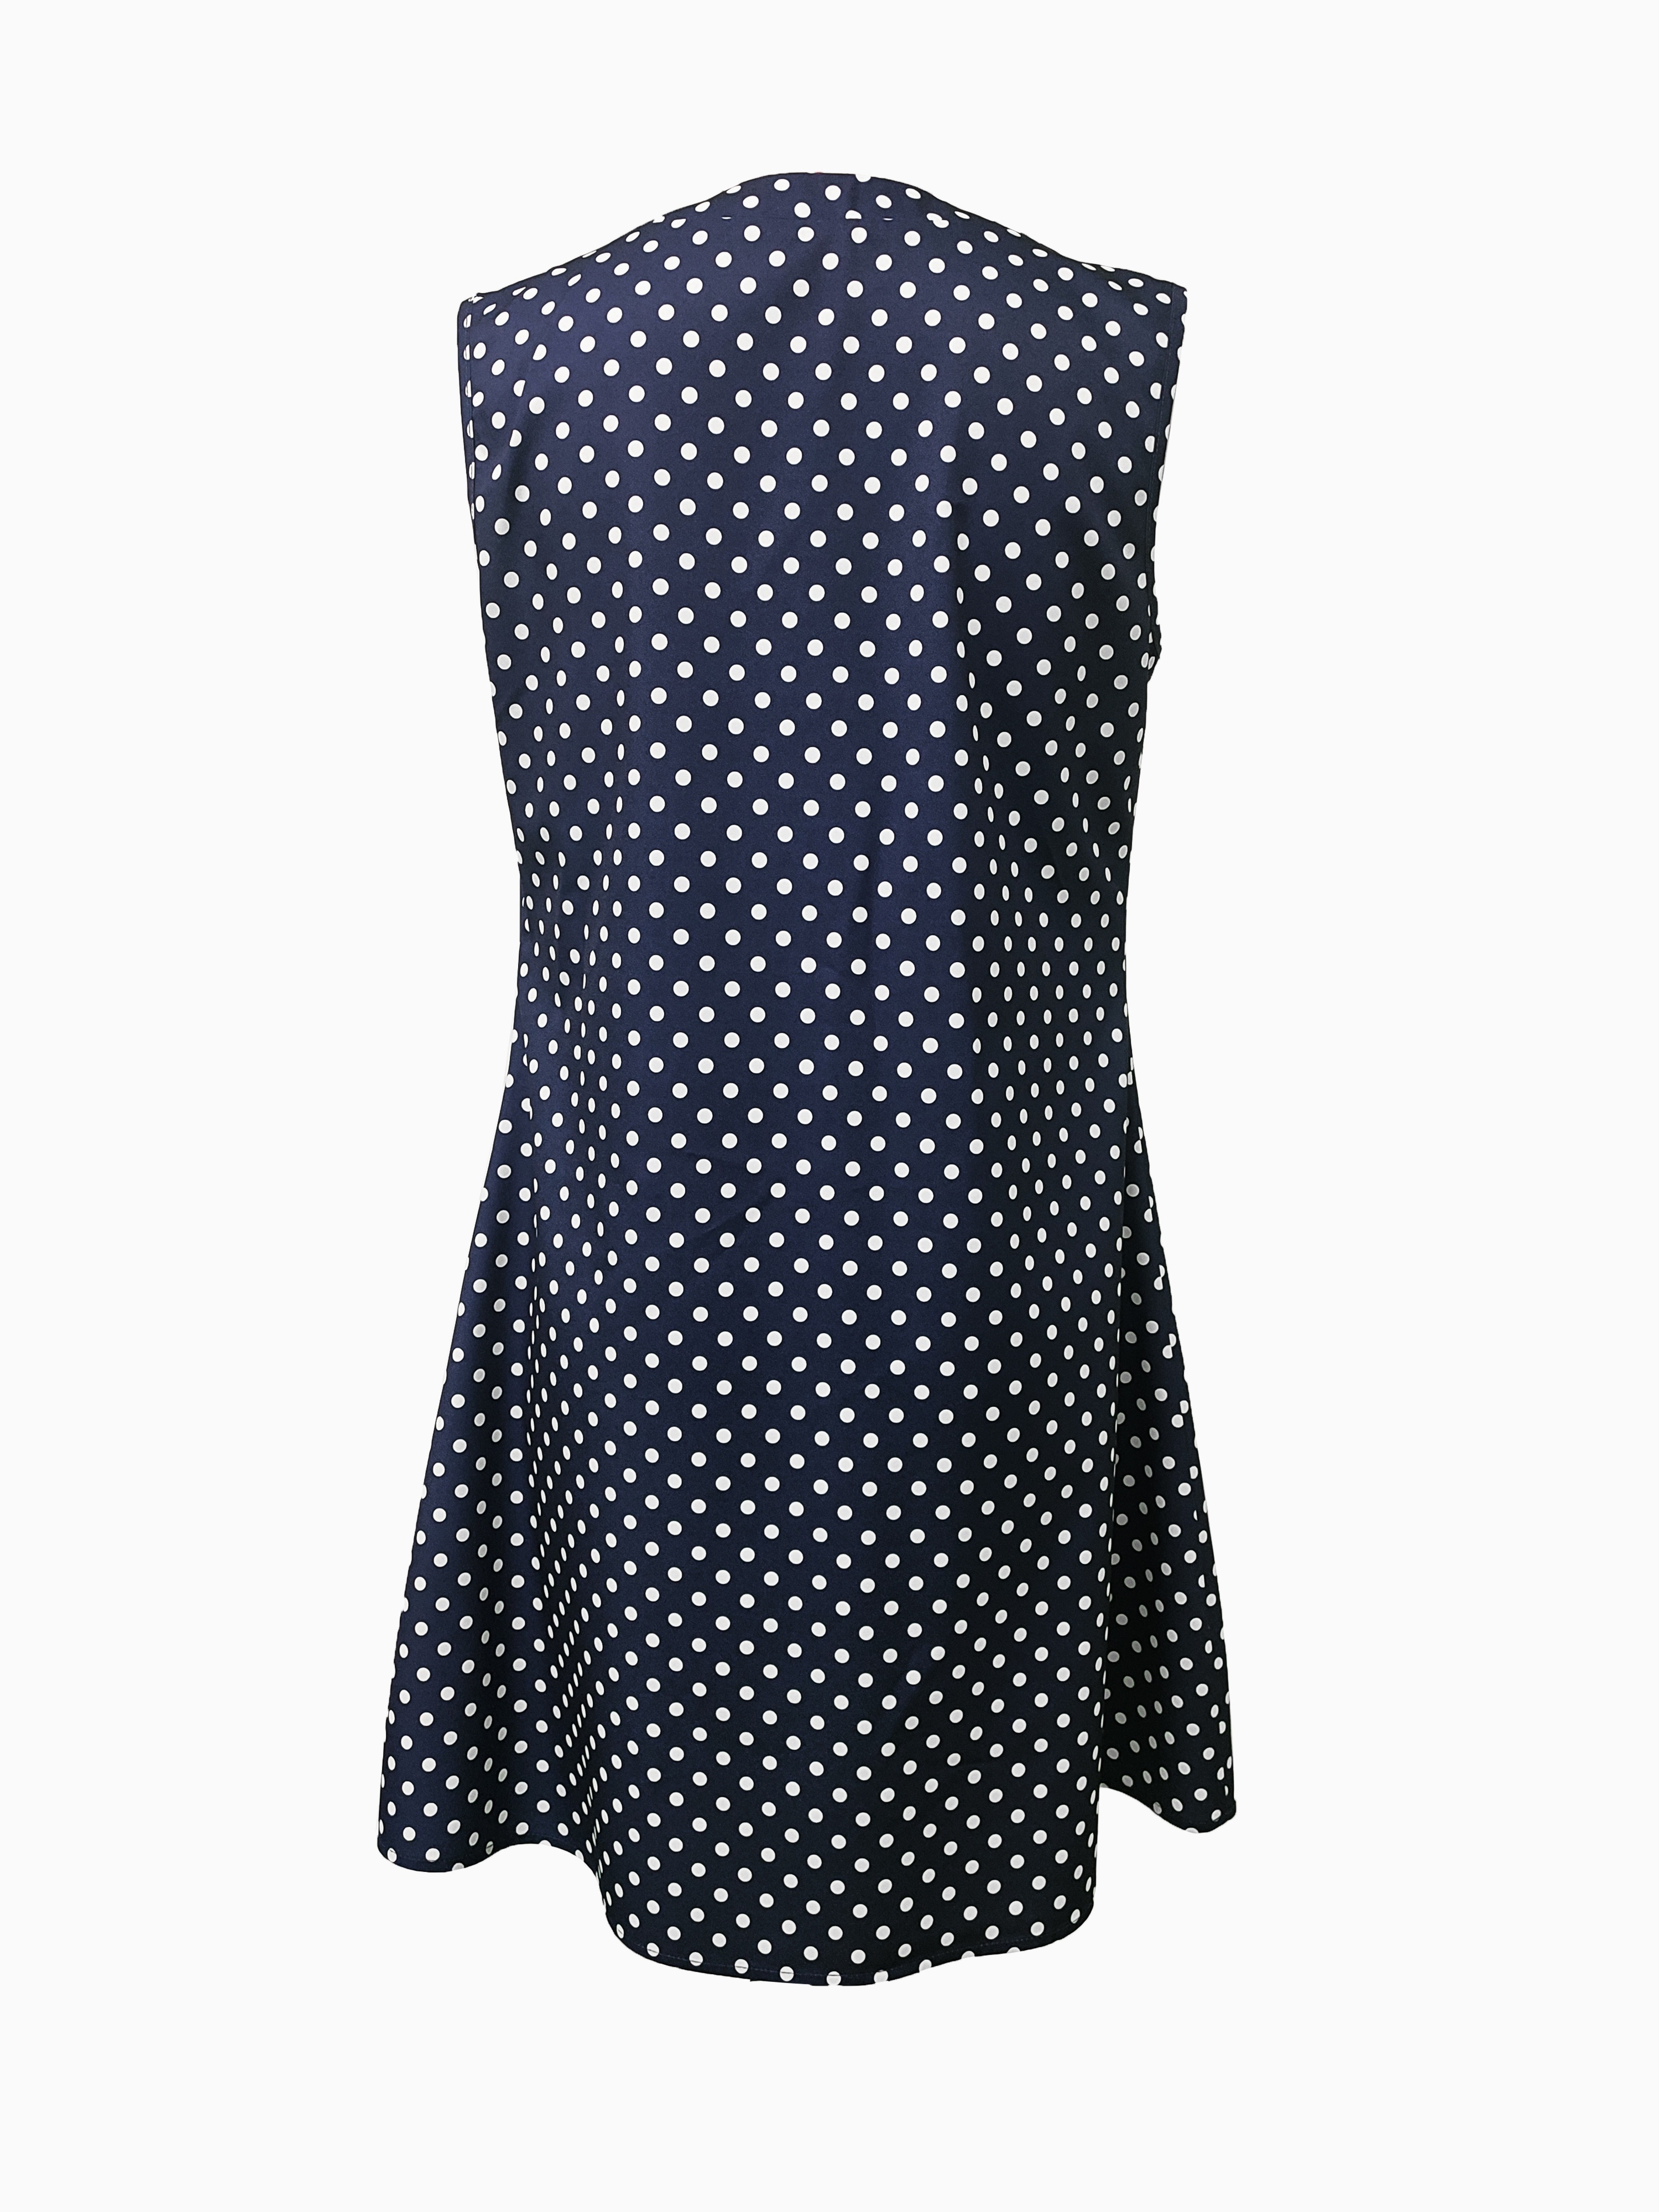 abstract ripple print dress casual v neck sleeveless dress womens clothing details 6